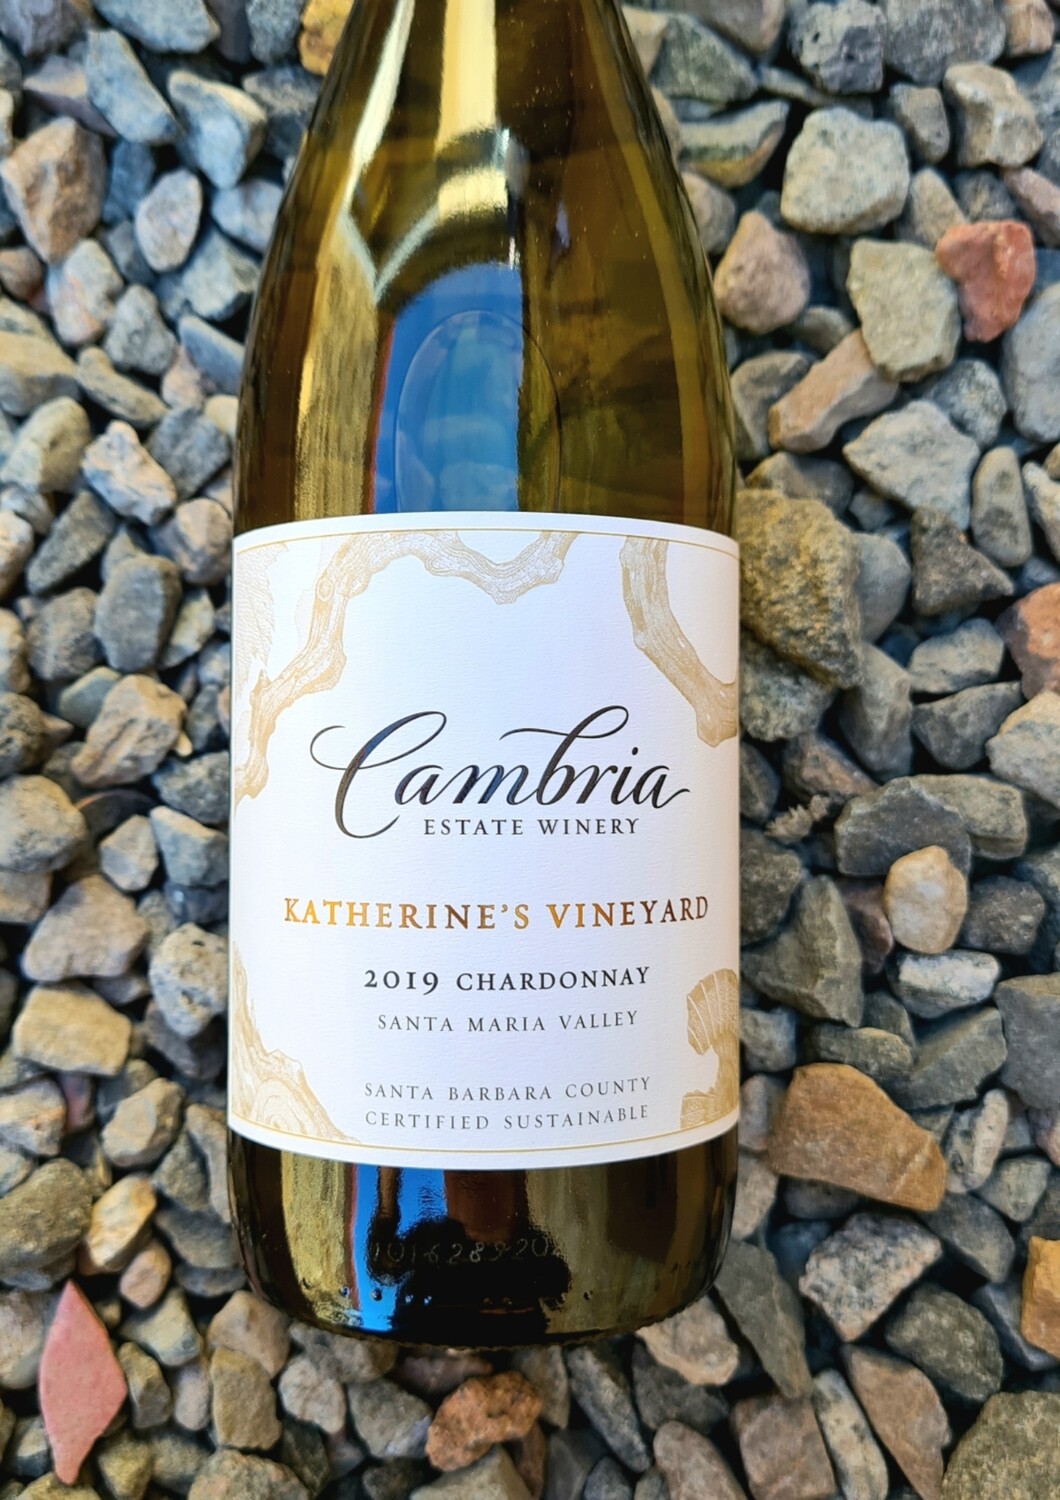 Cambria Estate 'Katherine's Vineyard' Chardonnay 2021